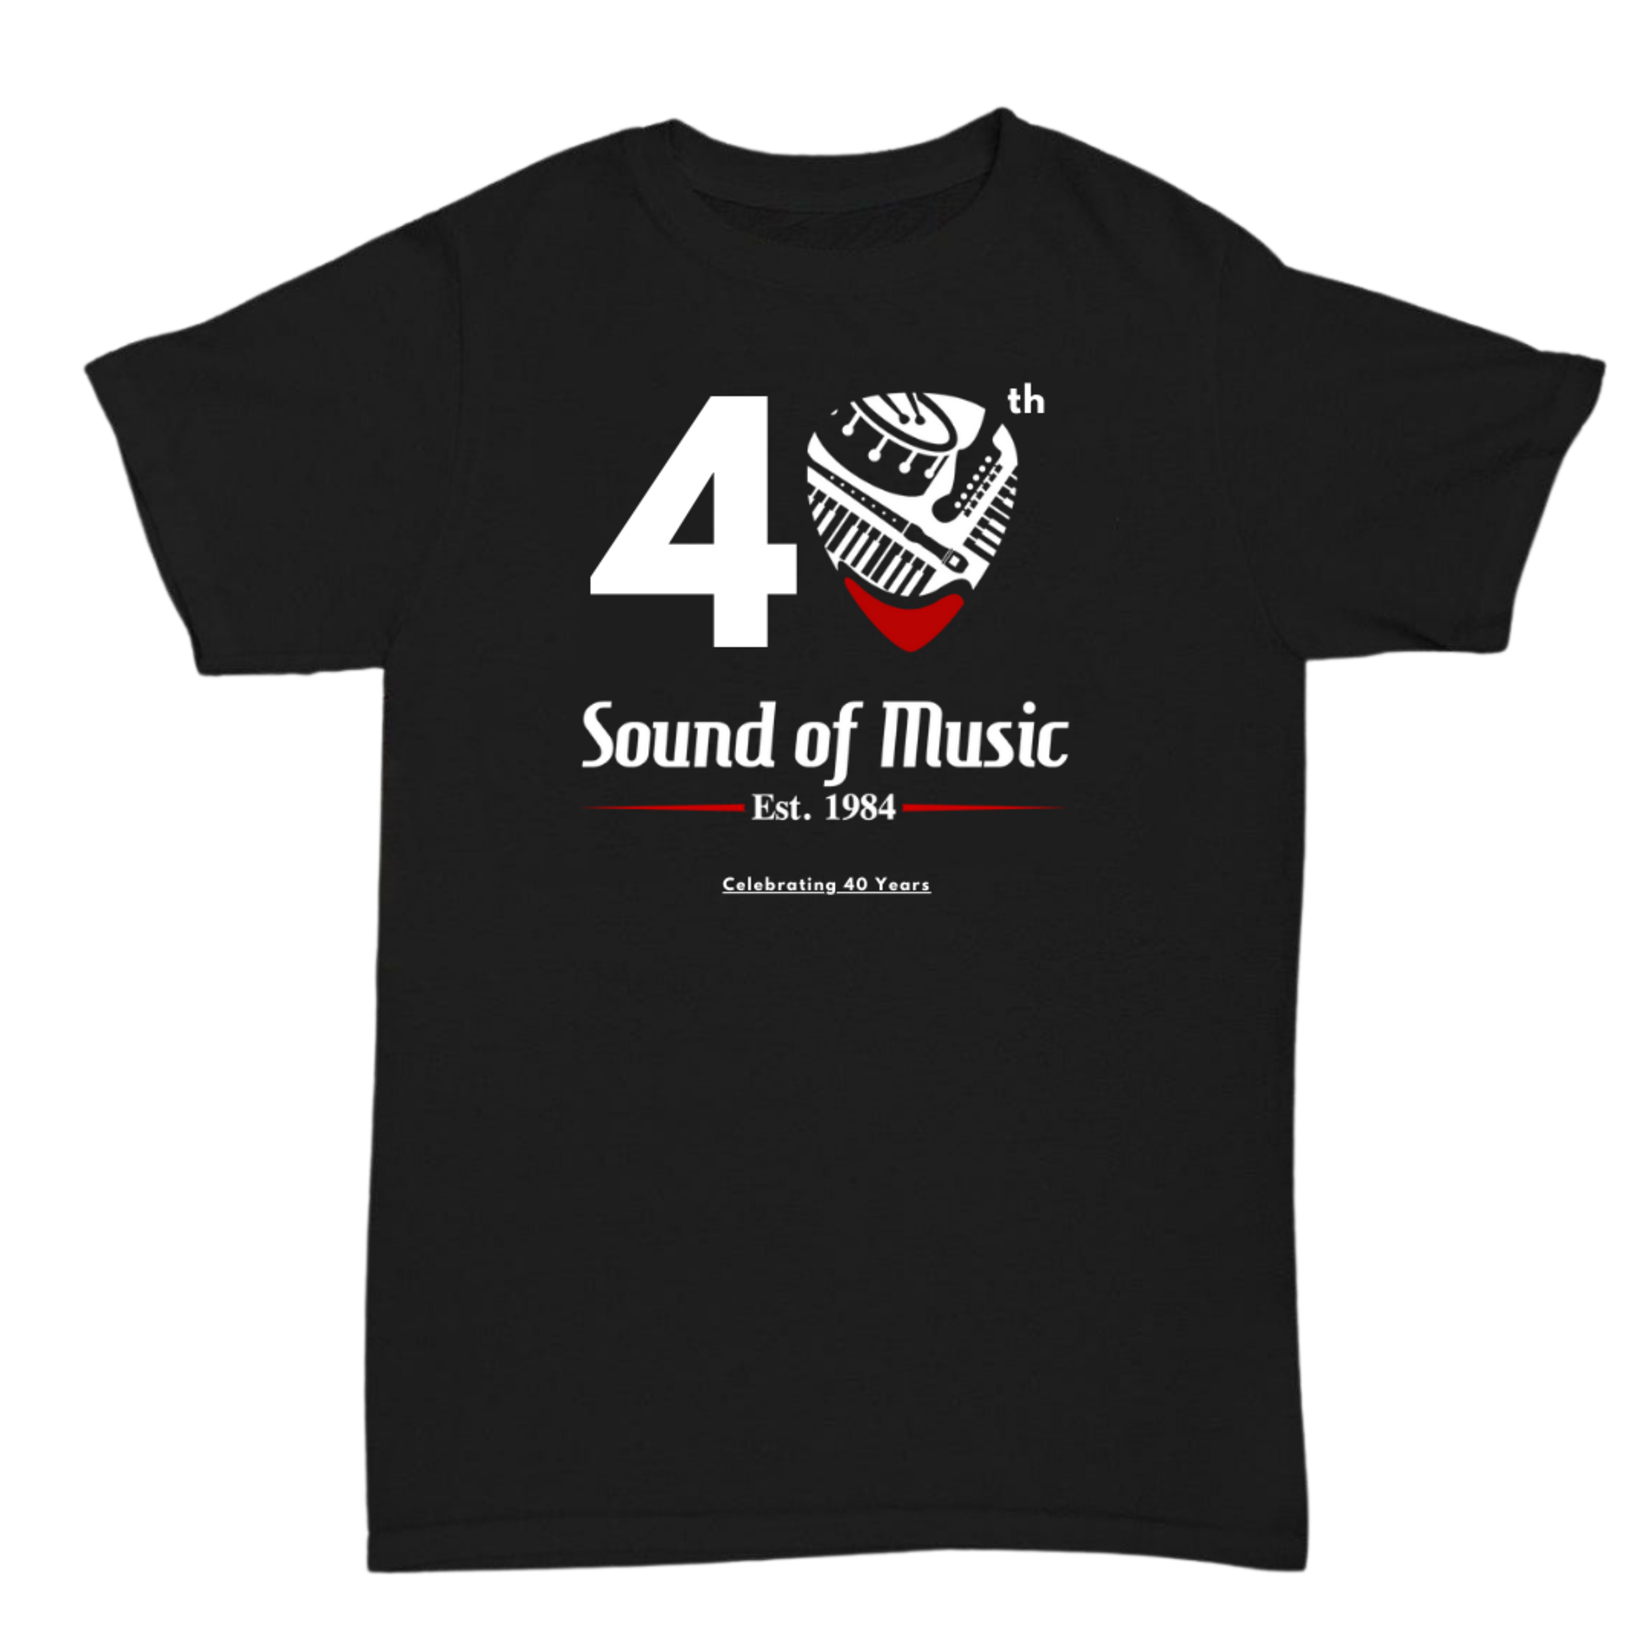 Sound of Music 40th Anniversary Shirt - XL